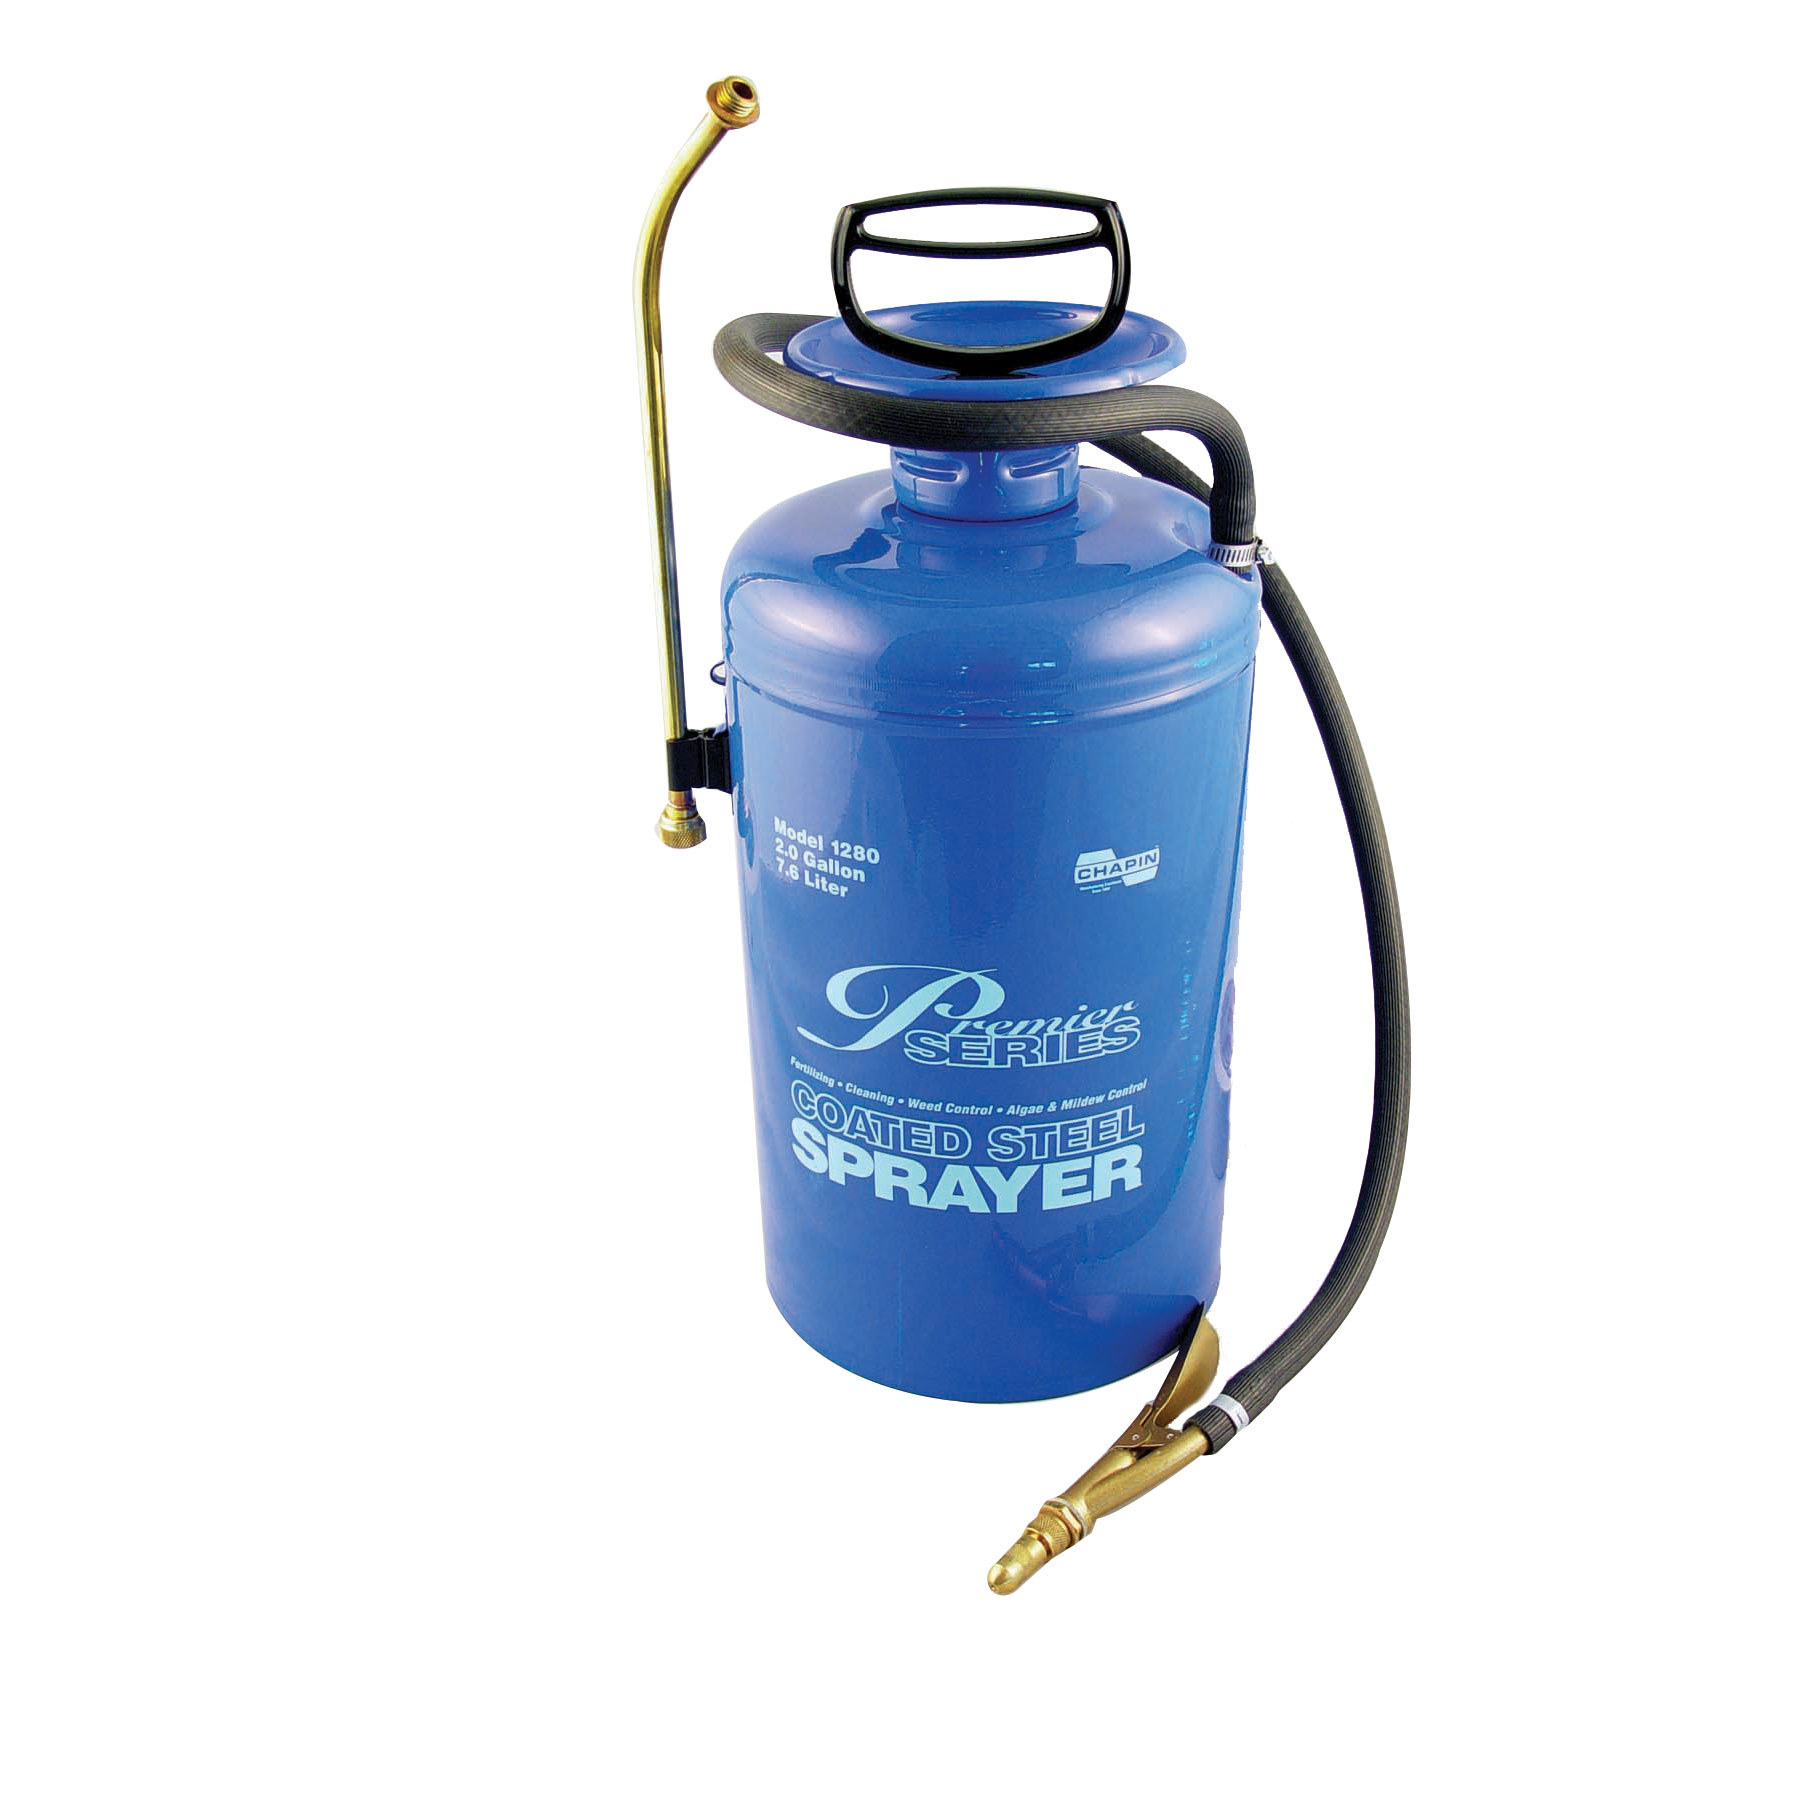 Chapin Premier Commercial Sprayer, 3 Gallon